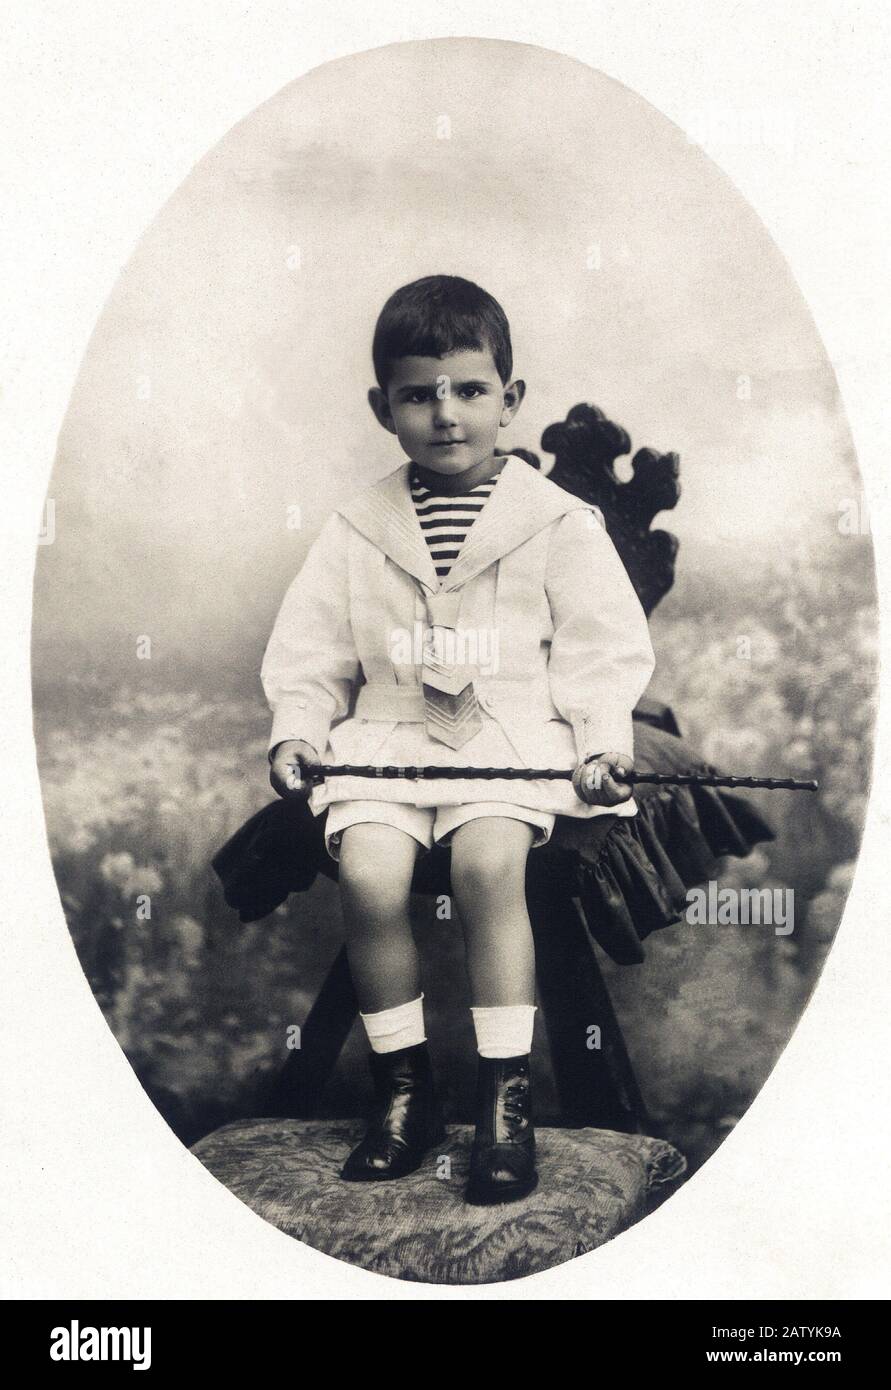 1909 c : UMBERTO di SAVOIA principe di Piemonte ( 1904 - 1983 ) , poi re d'Italia UMBERTO II - CASA SAVOIA - ITALIA - REALI - NOBILTa' ITALIANA - N. Foto Stock